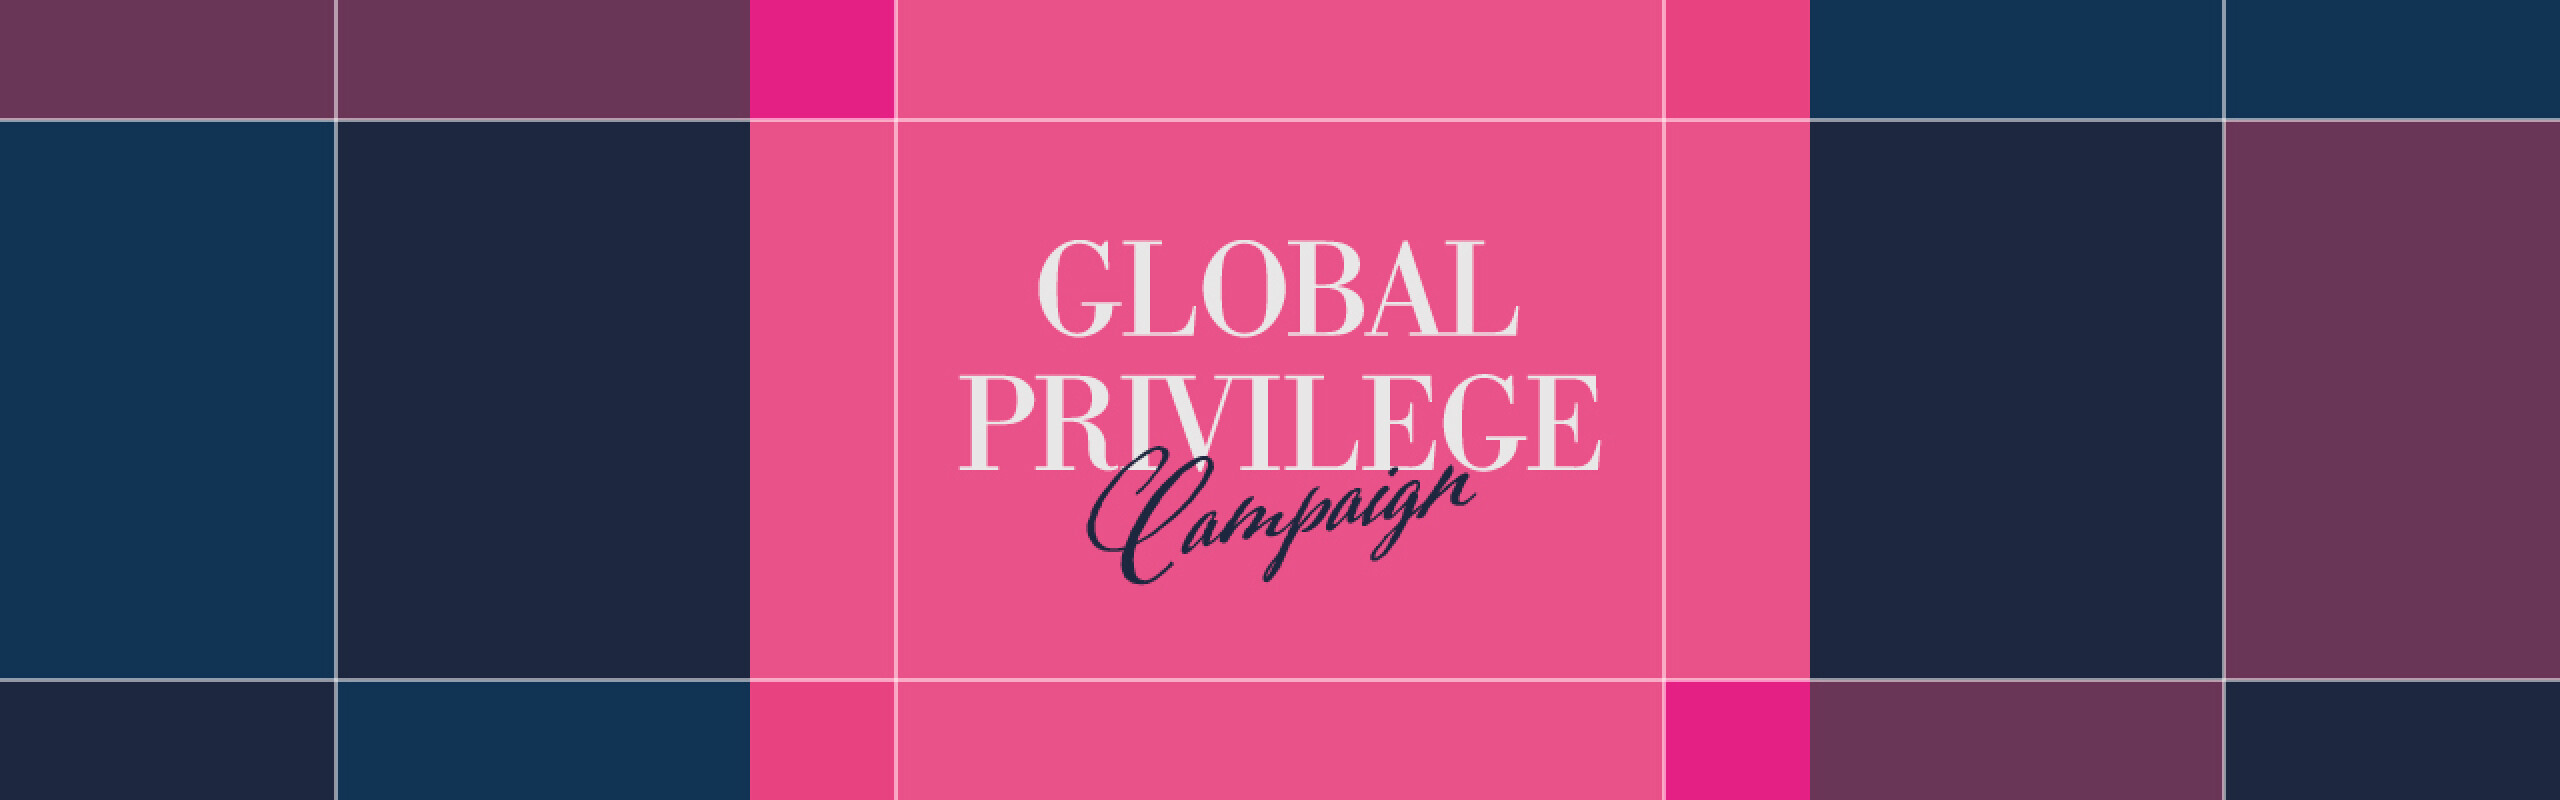 Global Privilege Campaign